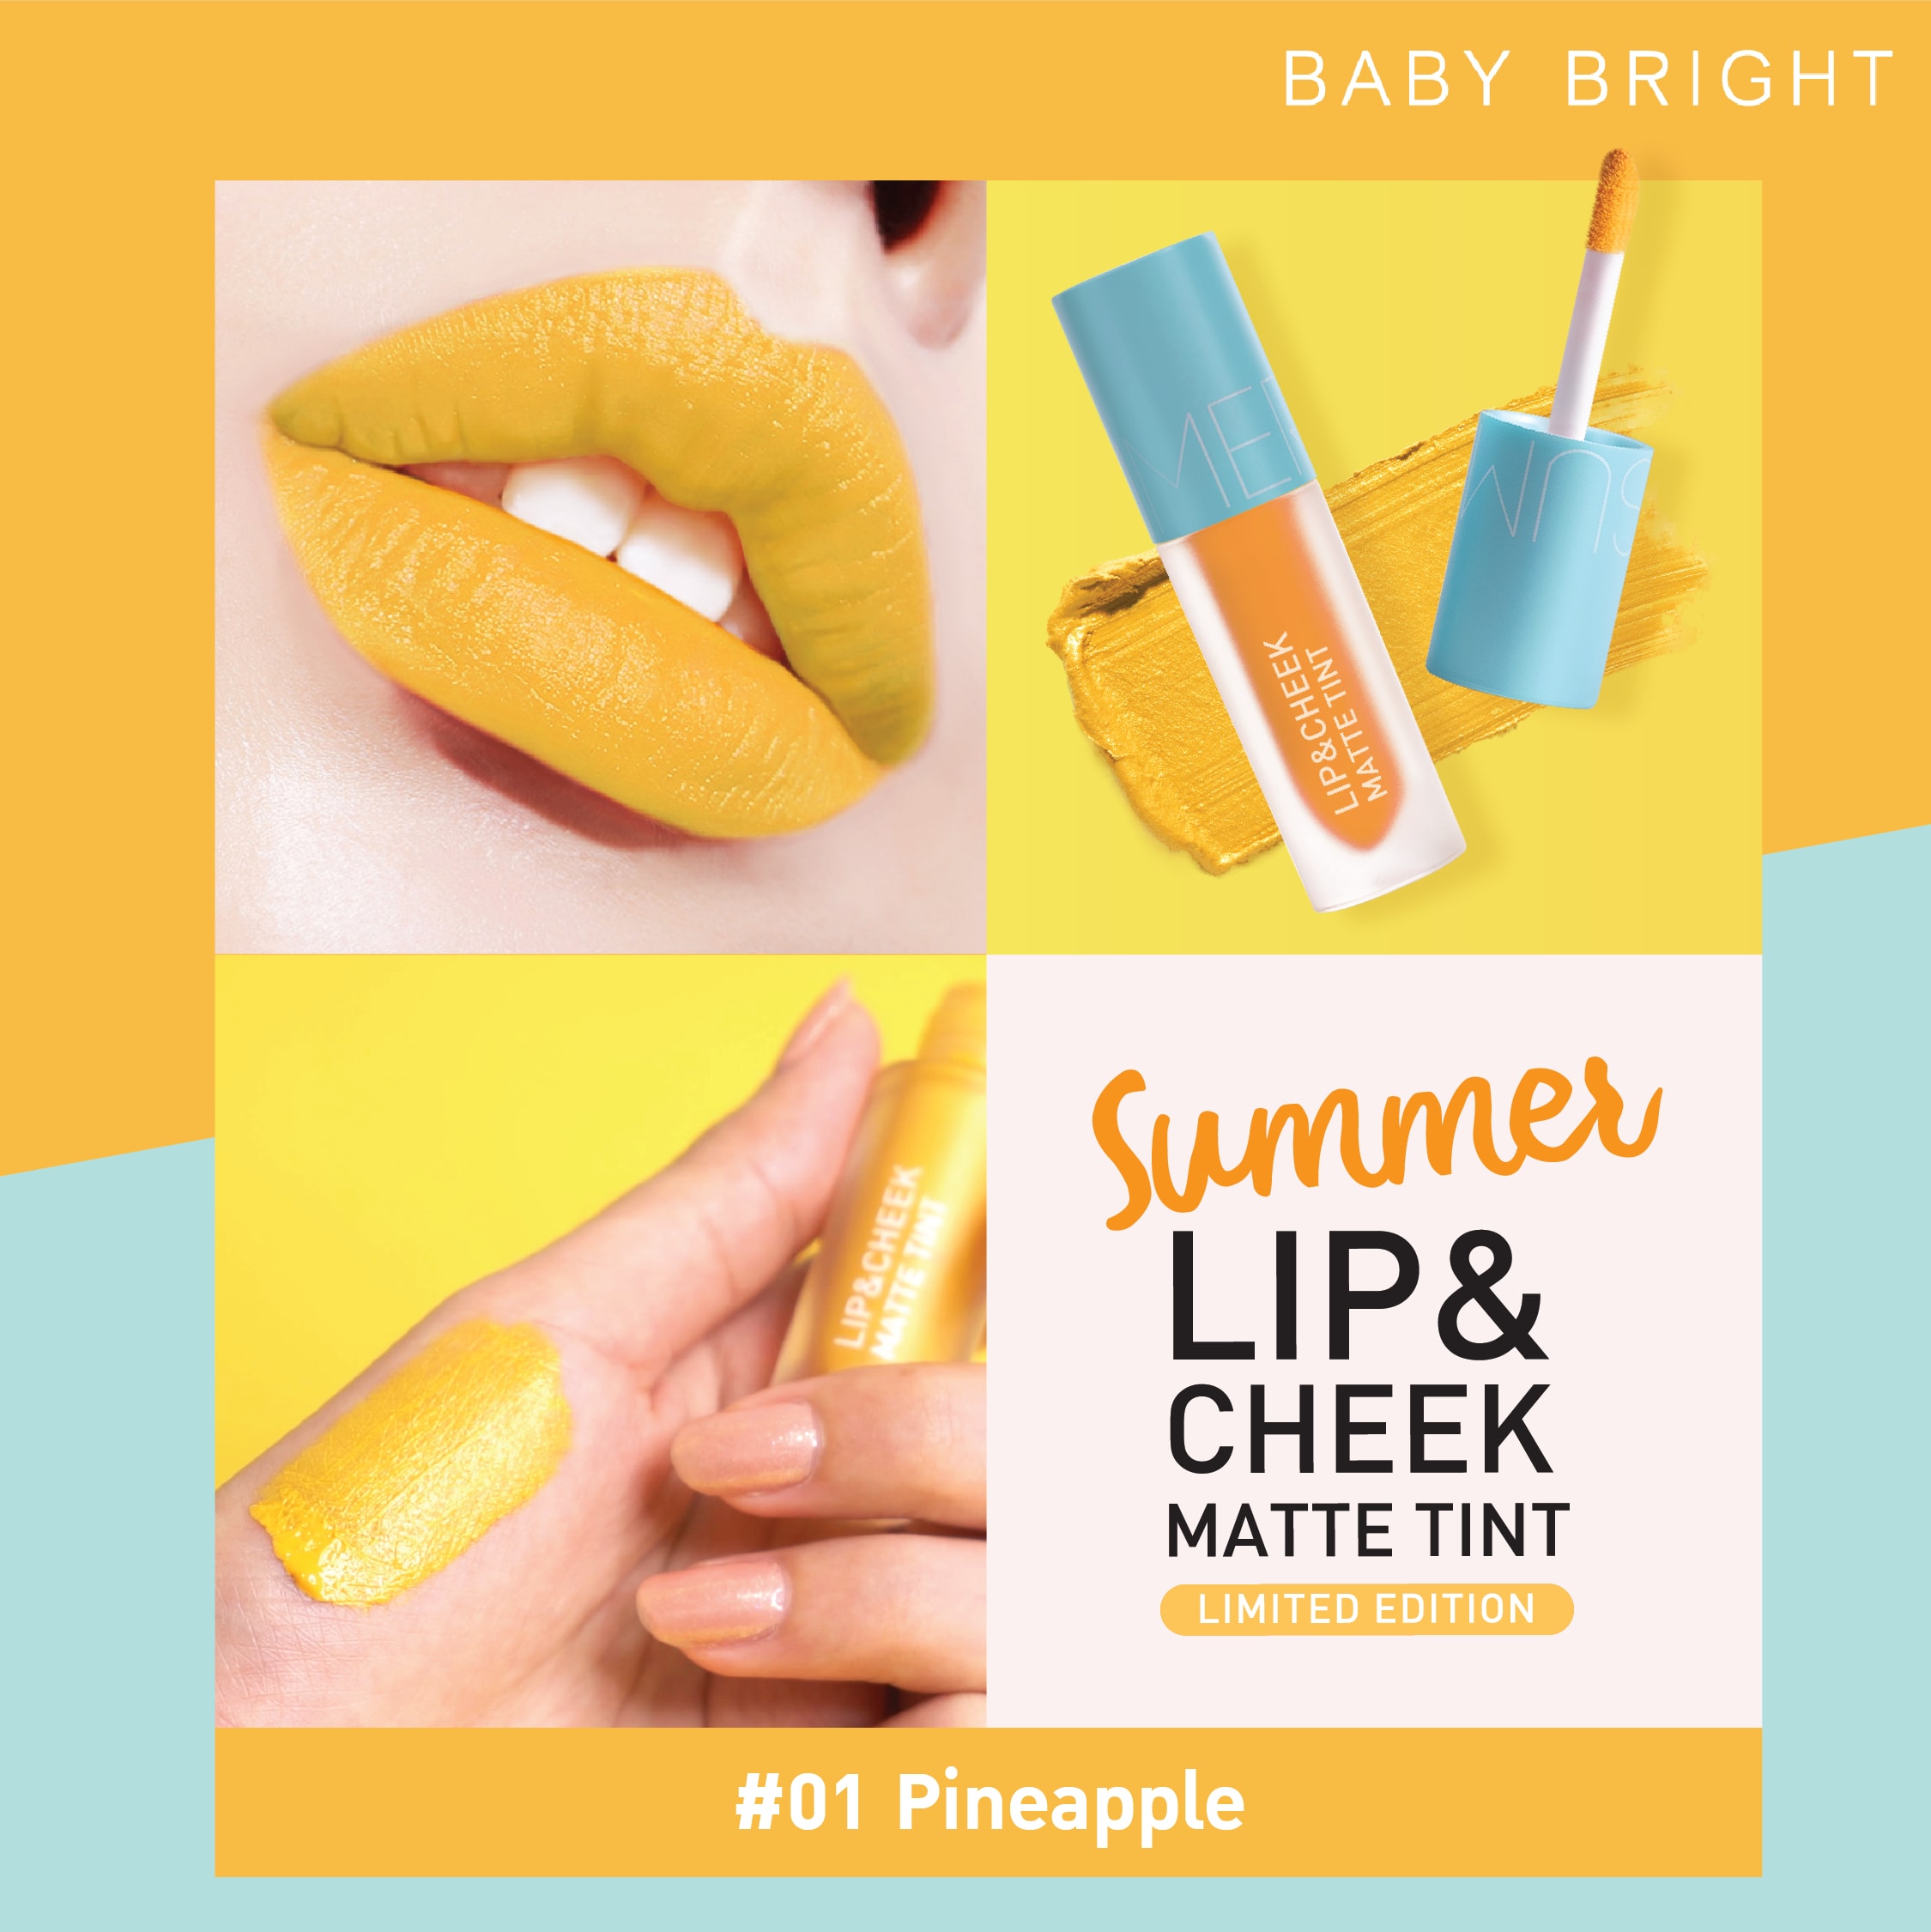 Baby Bright Summer Lip & Cheek Matte Tint Limited Edition #01 PINEAPPLE